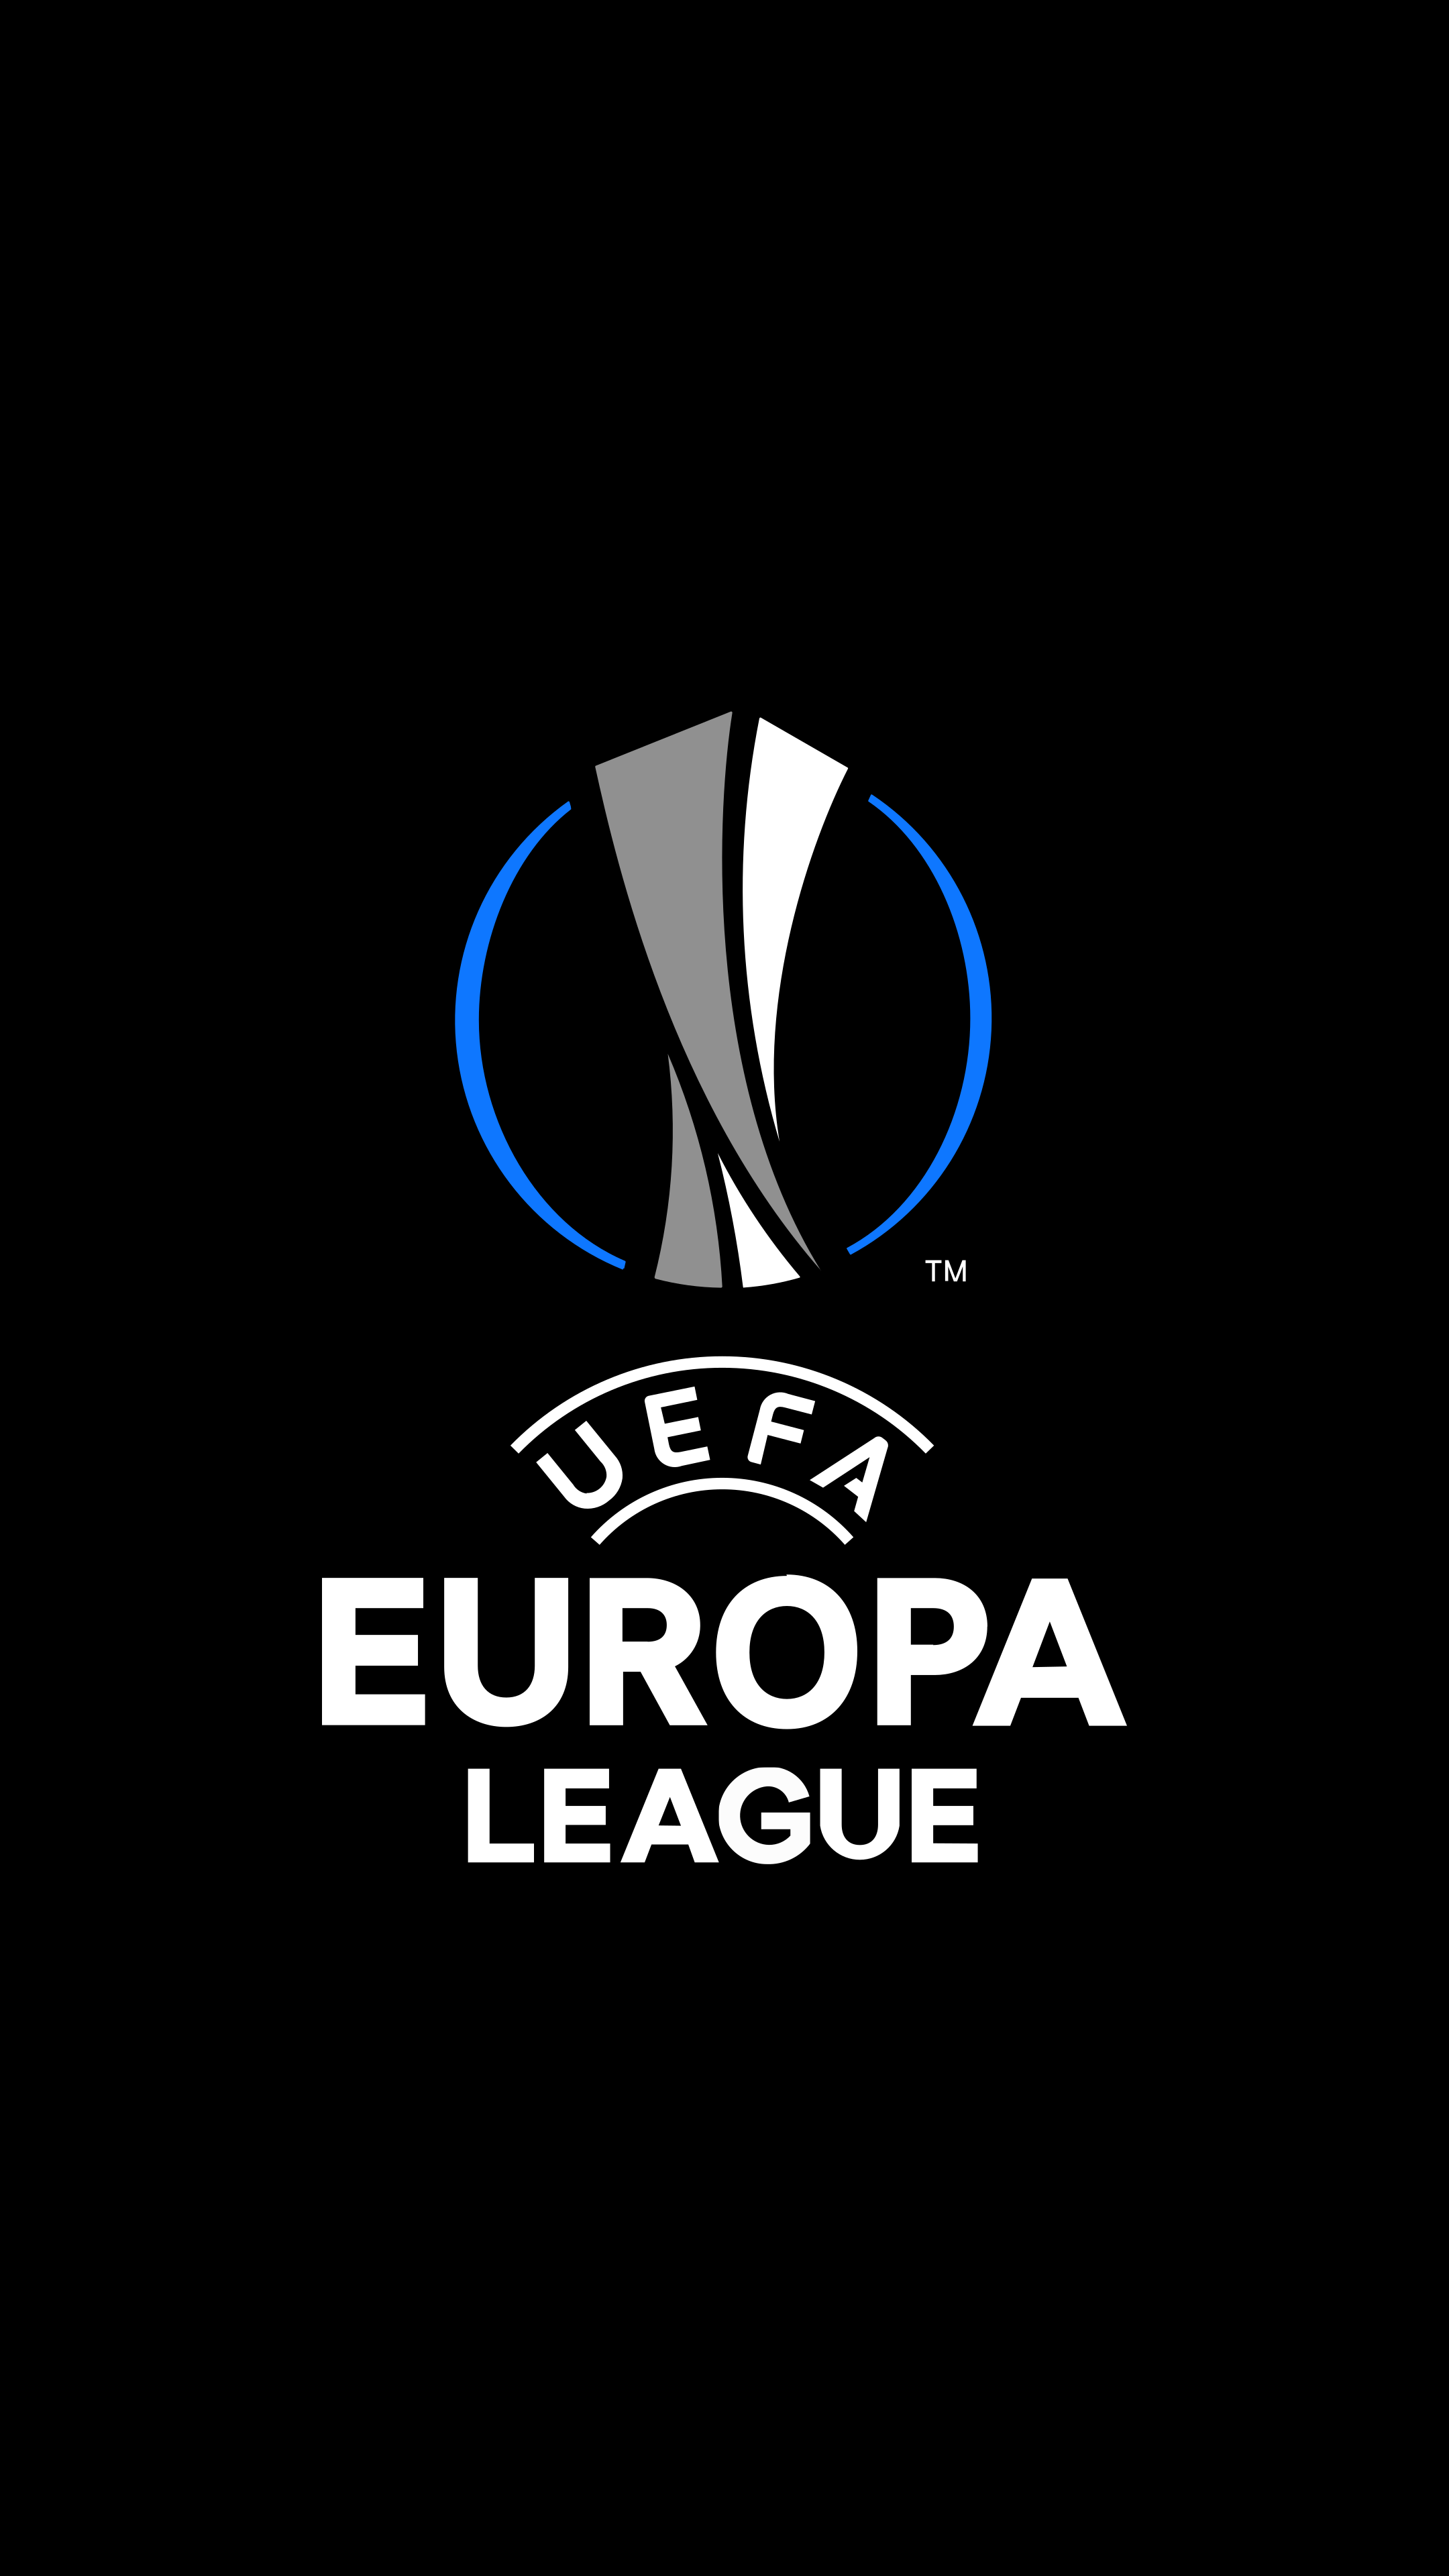 Europa League Emblem Wallpapers - Wallpaper Cave